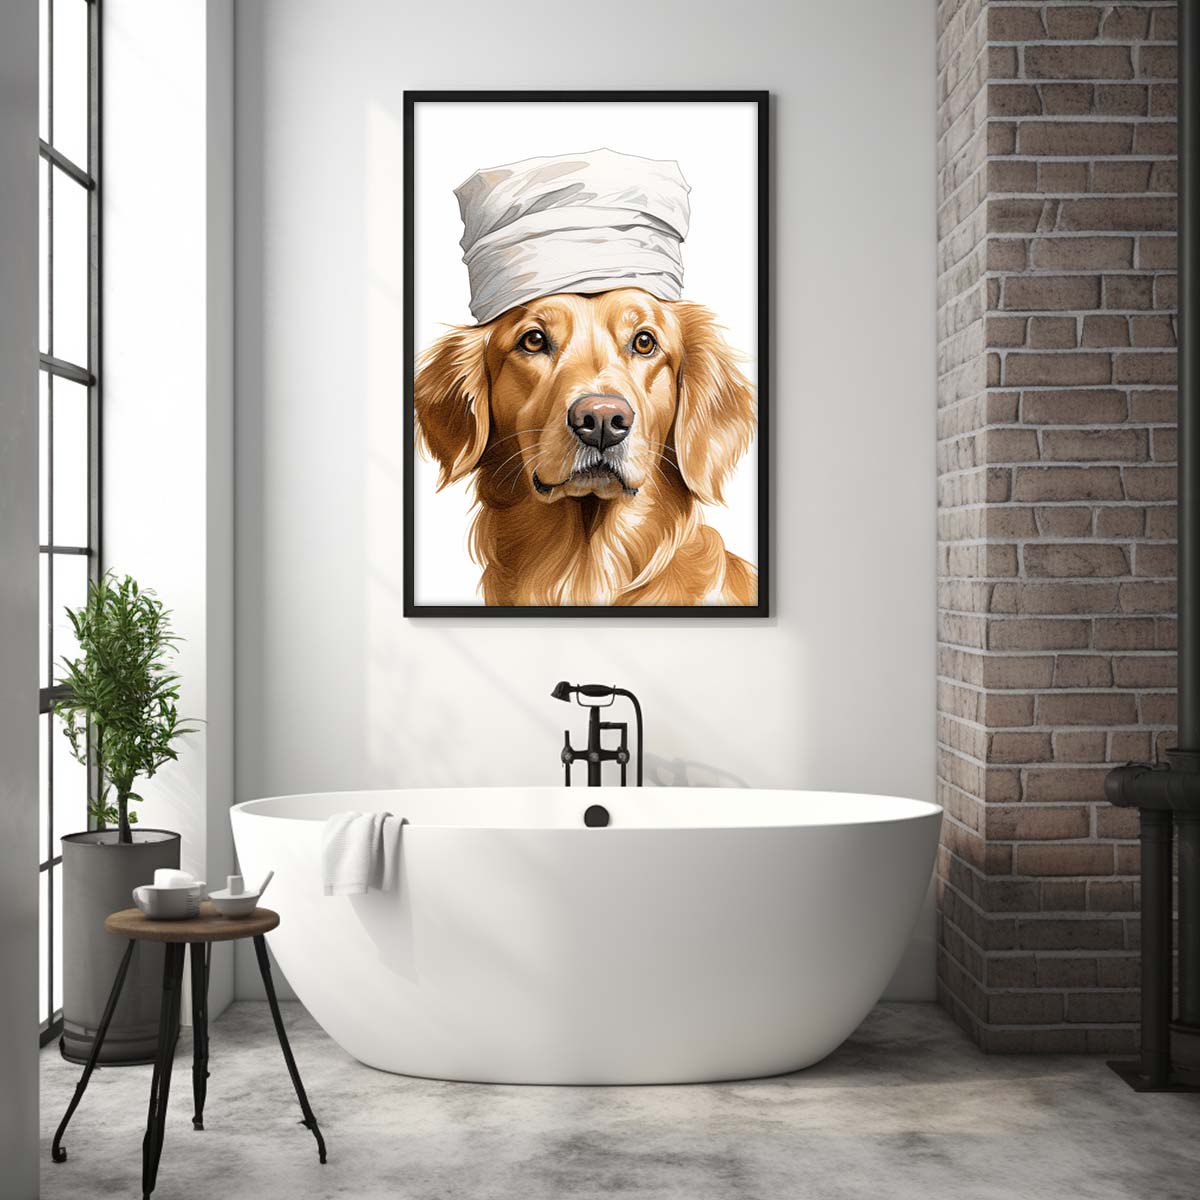 Golden Retriever Dog With Toilet Paper Canvas Art, Golden Retriever Dog With Toilet Paper, Funny Dog Art, Bathroom Wall Decor, Home Decor, Bathroom Wall Art, Dog Wall Decor, Animal Decor, Pet Gift